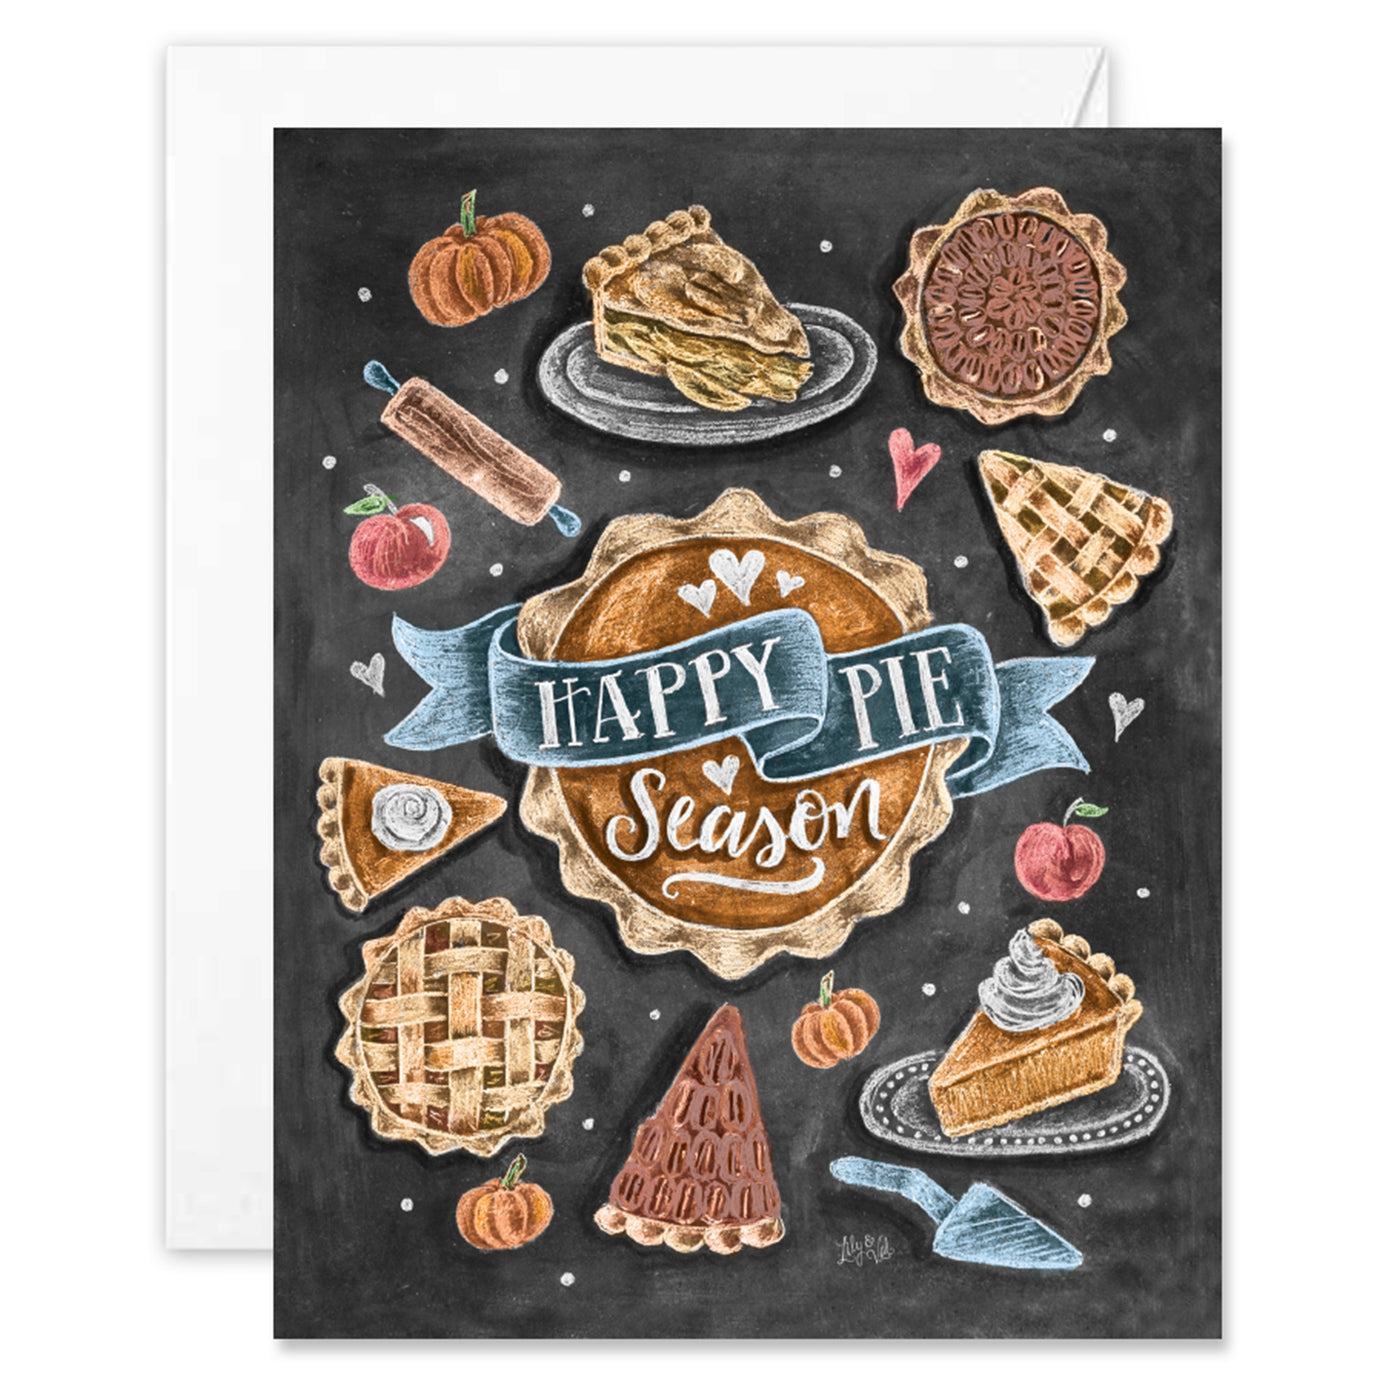 Happy Pie Season Greeting Card